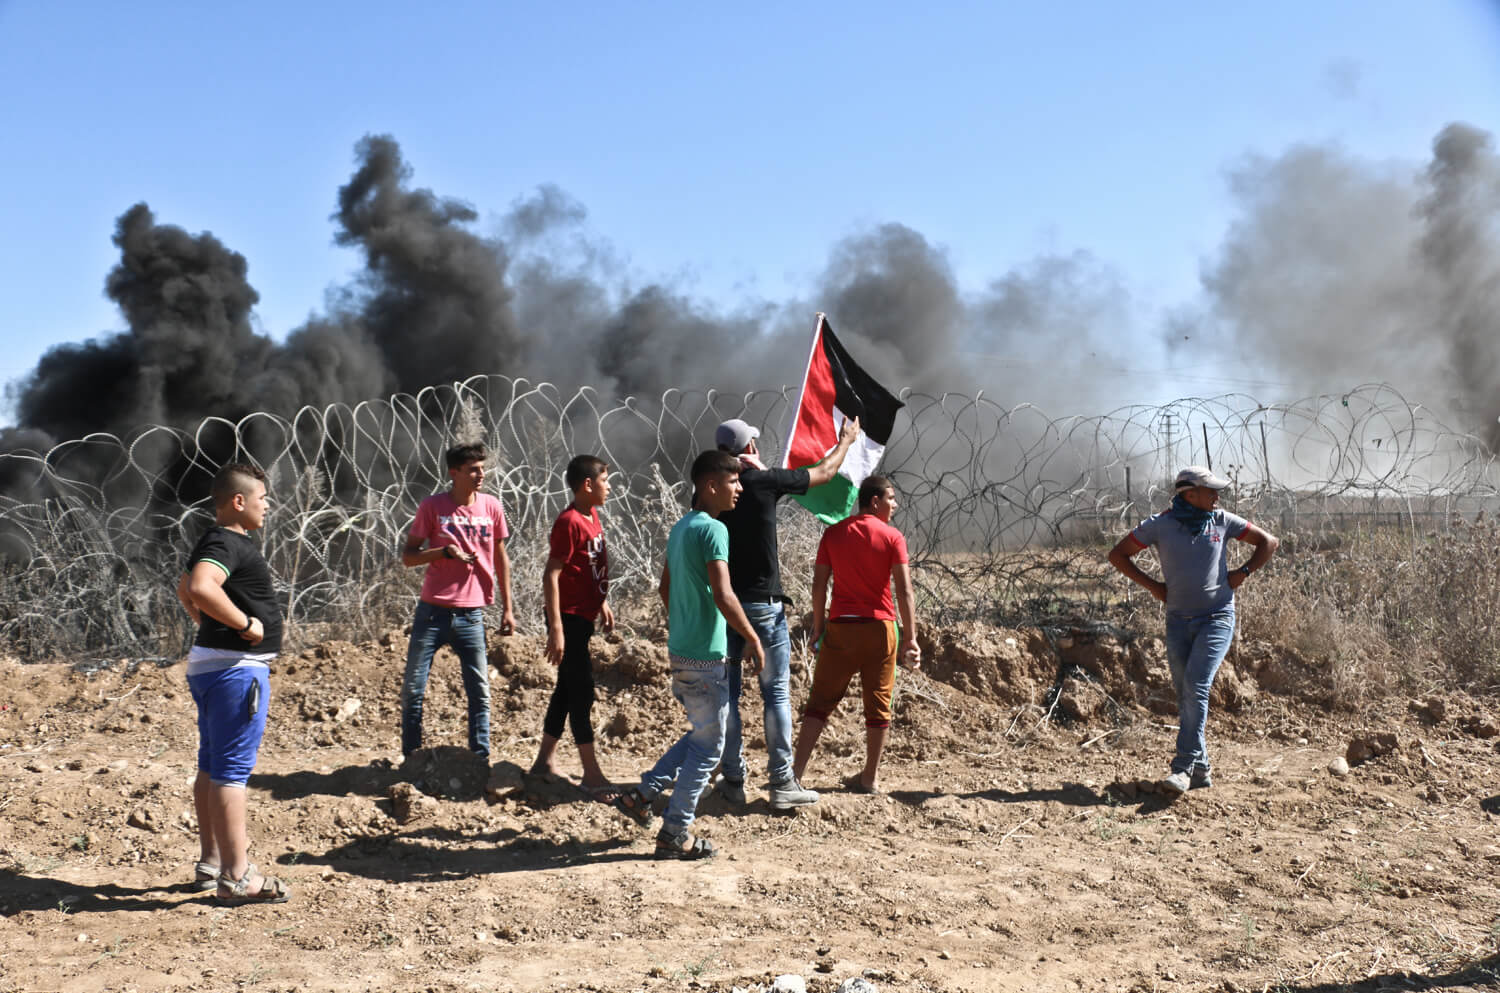 Protesters near Nahal Oz, east of the al-Bureij refugee camp in central Gaza Strip, September 30, 2016. (Photo: Mohammed Asad)